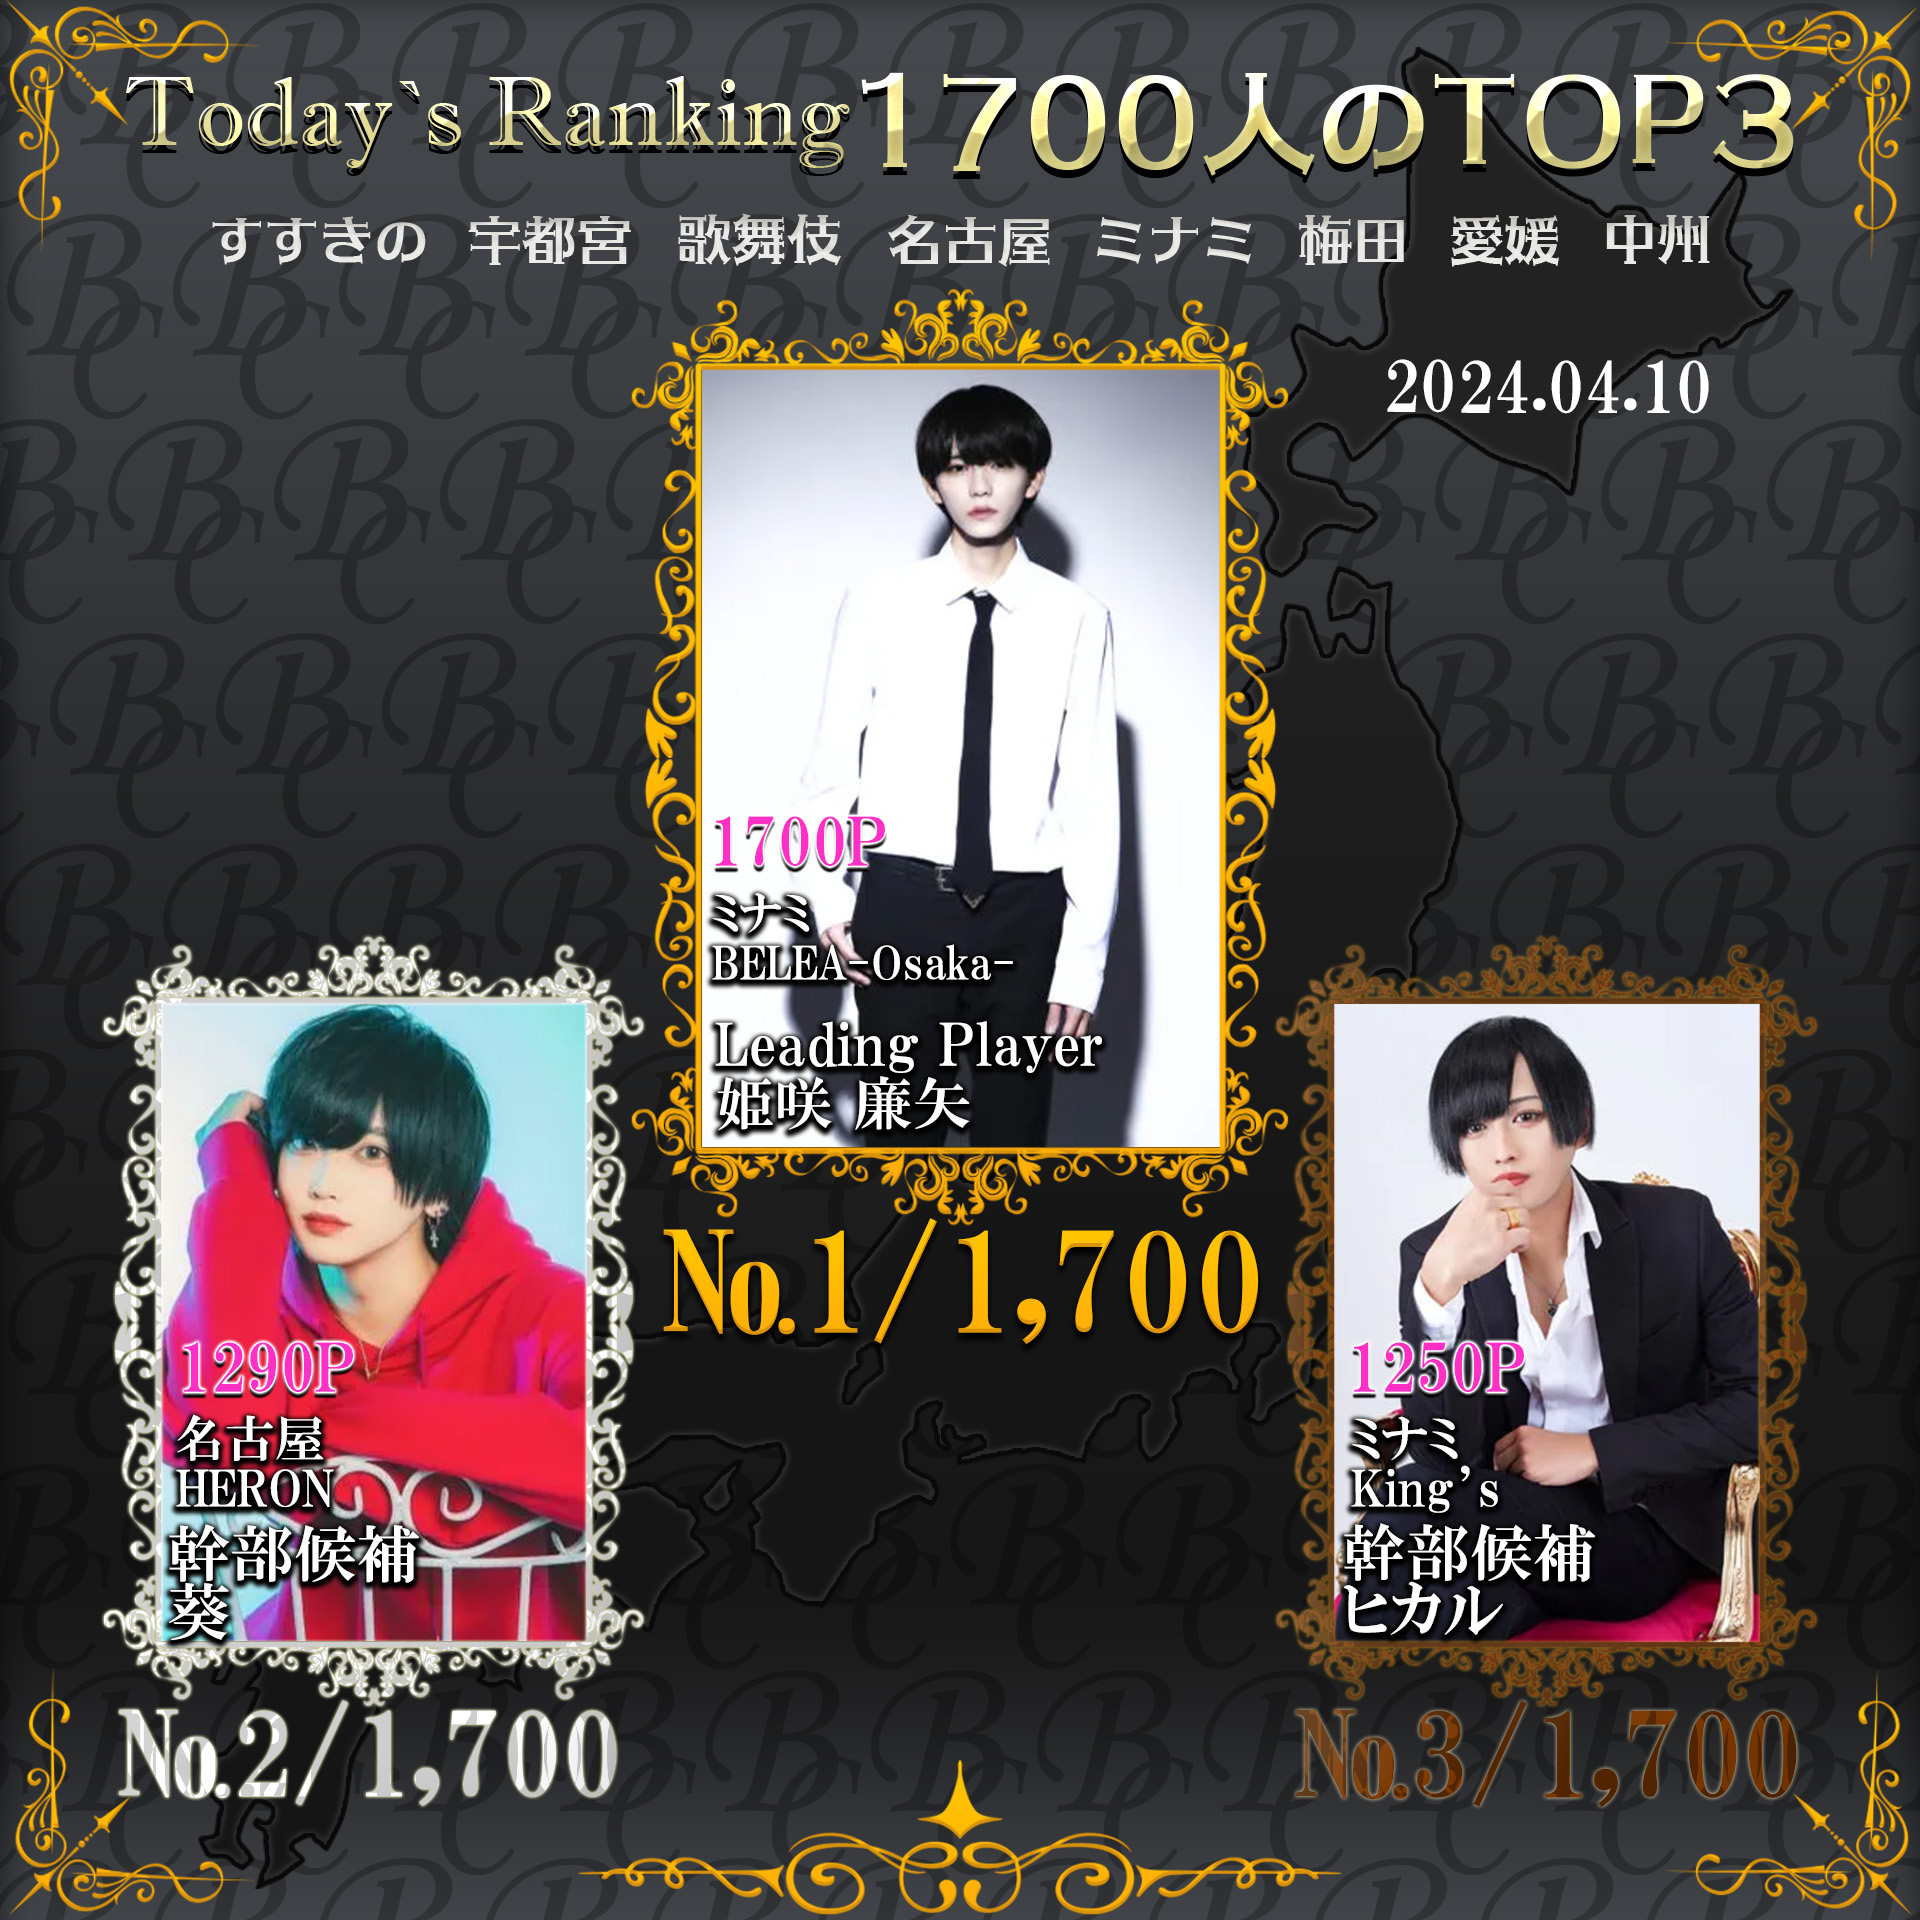 4/10 Today’s Ranking